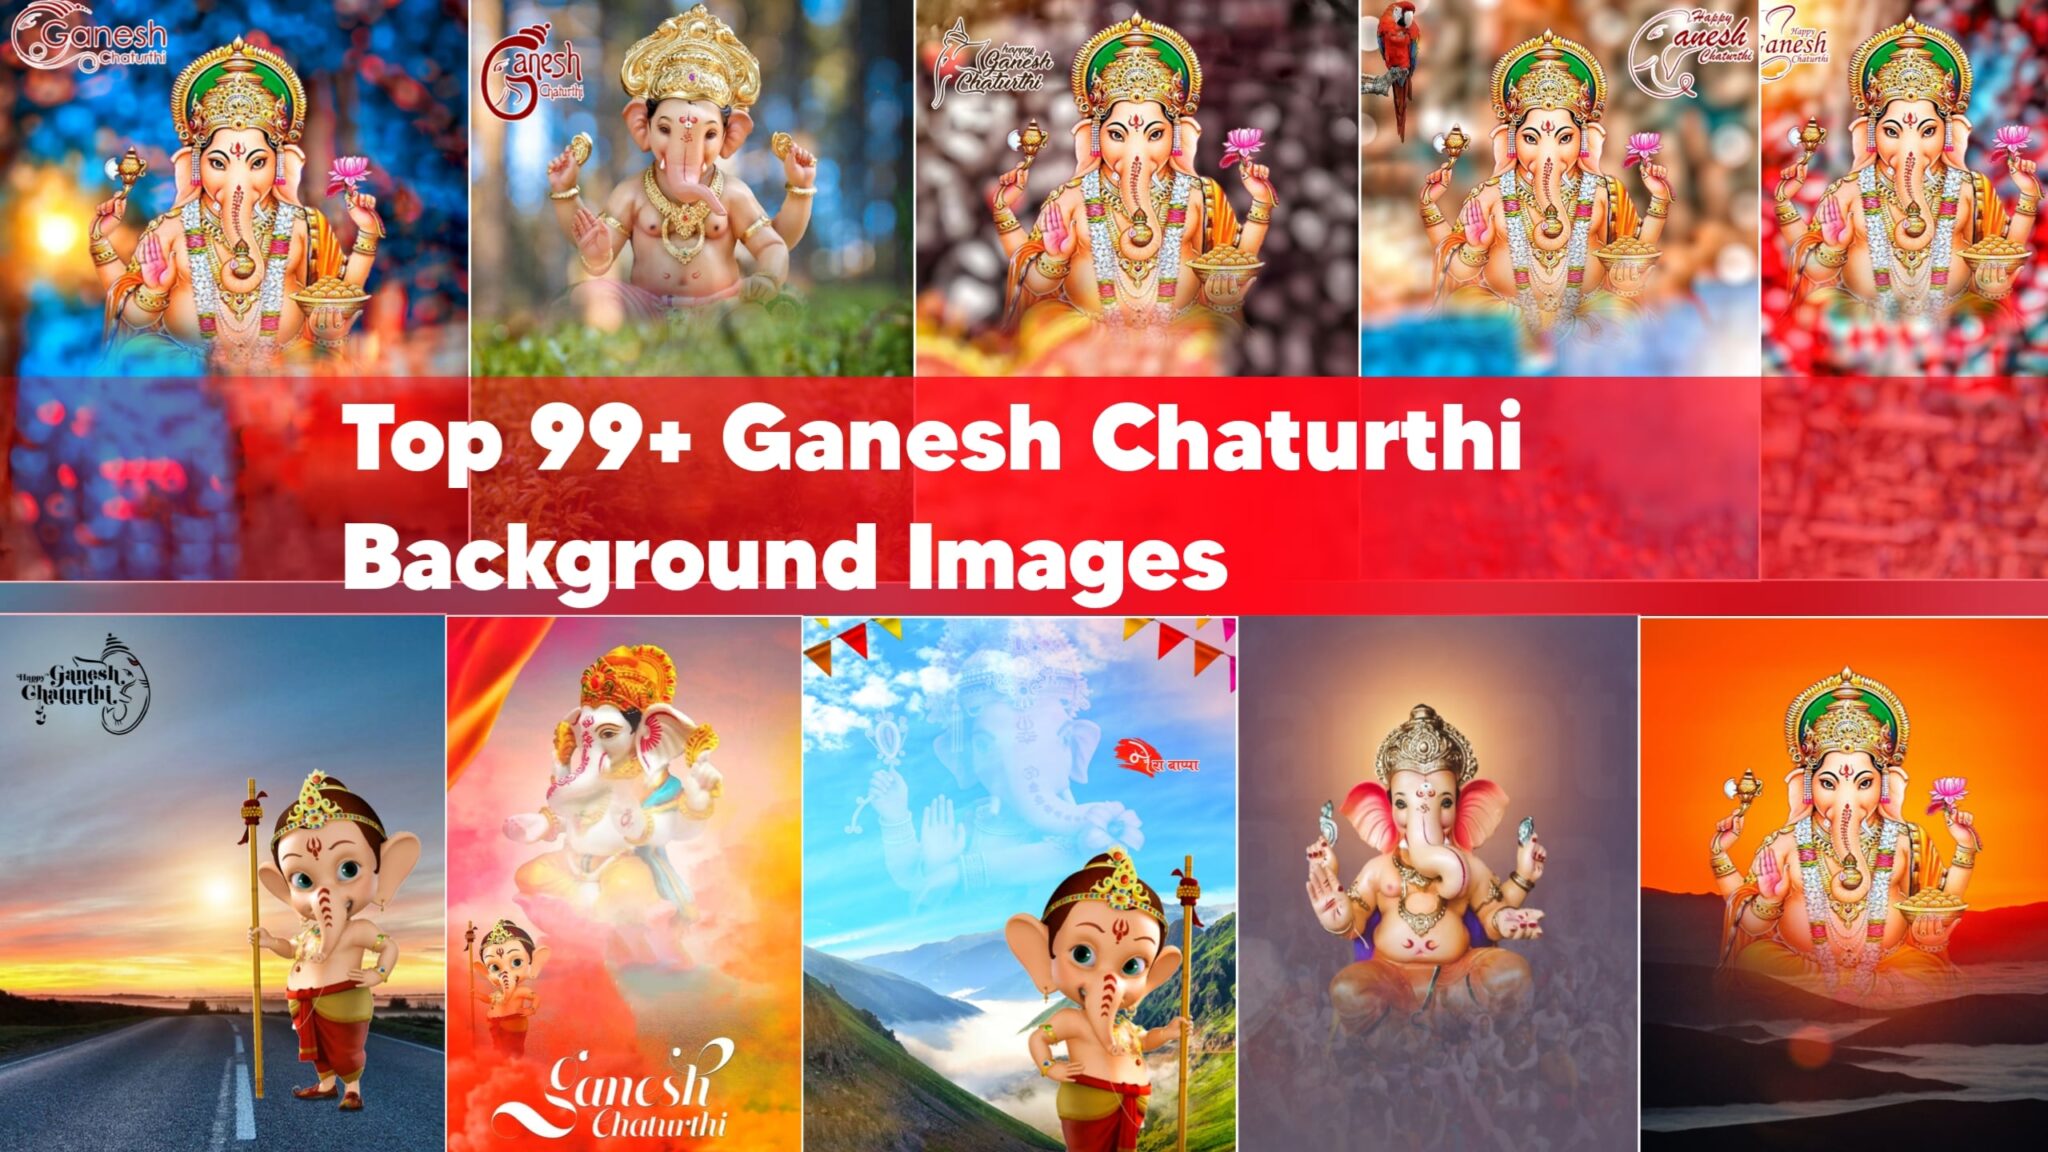 Top 99+ Ganesh Chaturthi Background Images